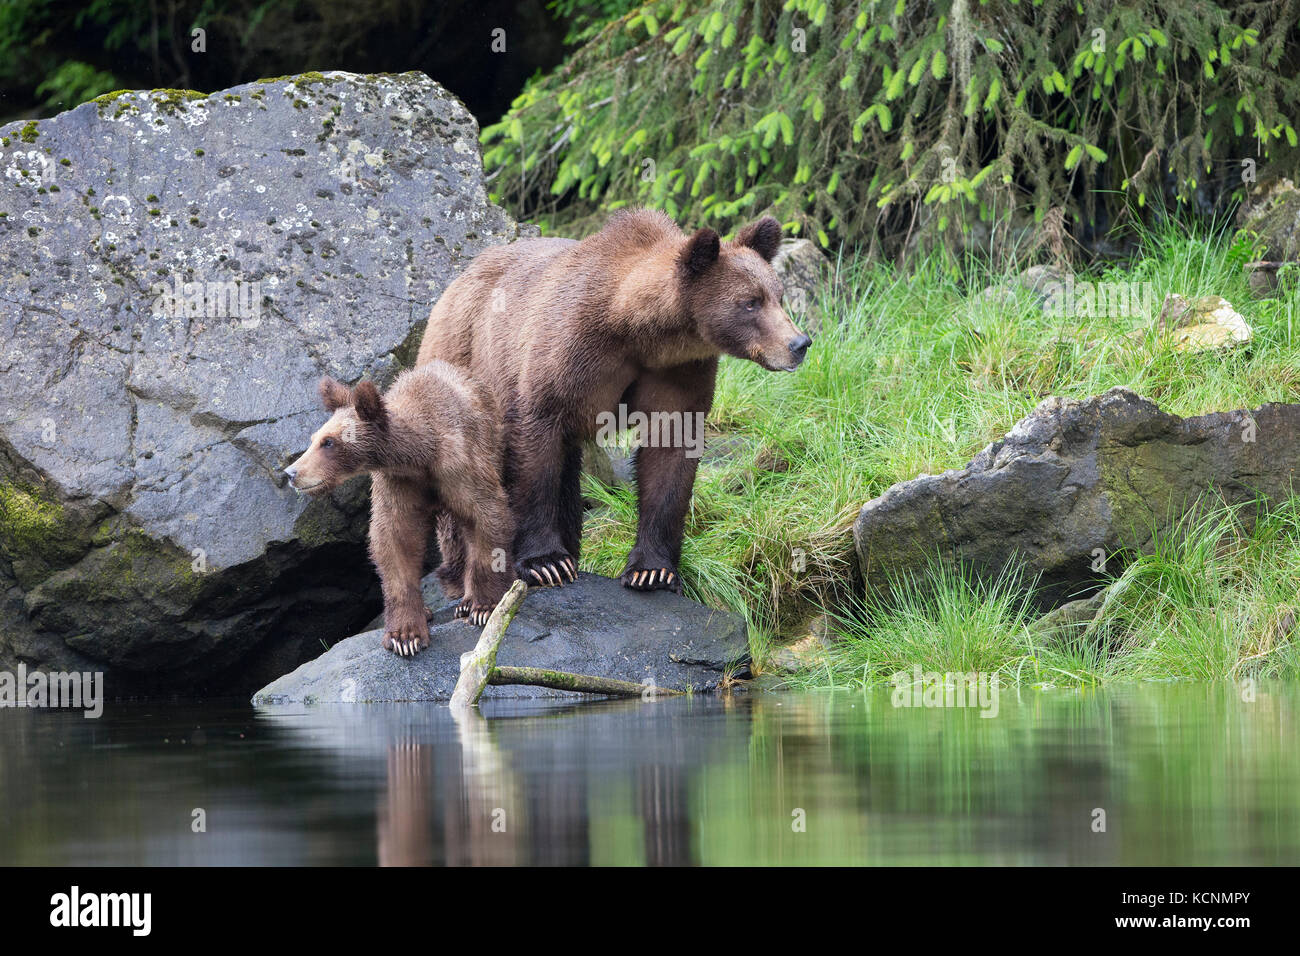 Oso grizzly (Ursus arctos horribilis), hembra y yearling cub, khutzeymateen Grizzly Bear sanctuary, British Columbia, Canadá. Foto de stock